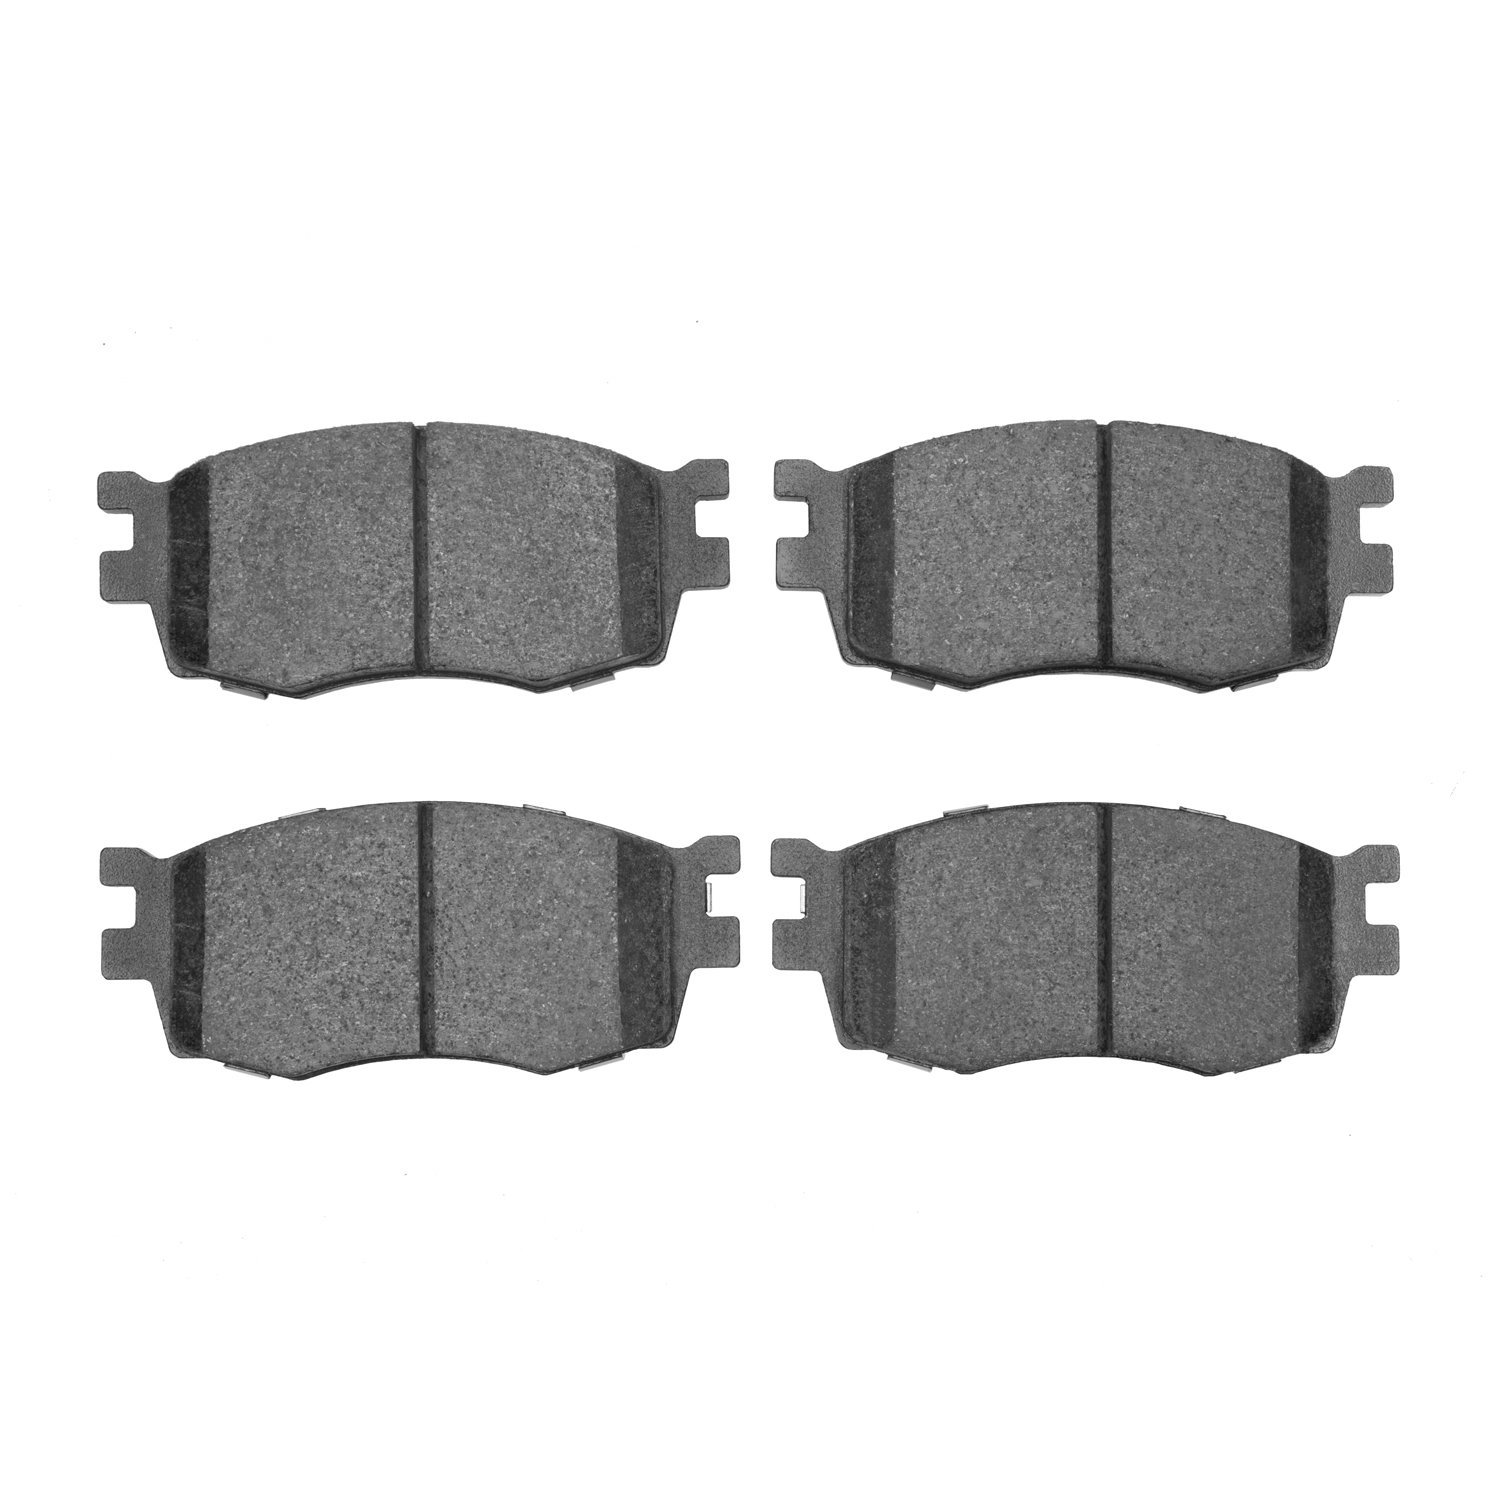 Semi-Metallic Brake Pads, 2006-2012 Fits Multiple Makes/Models, Position: Front